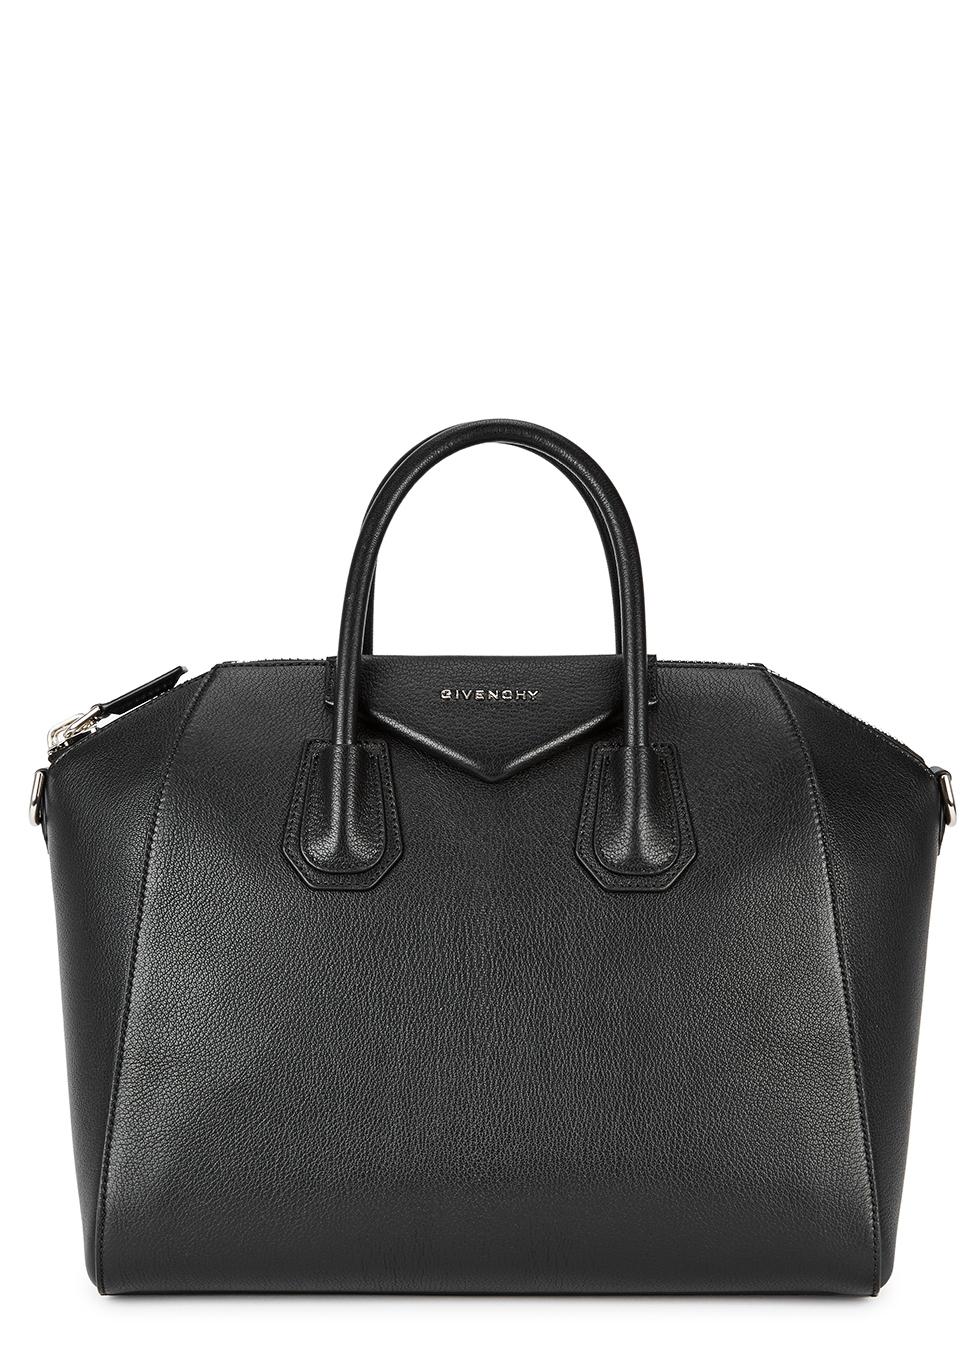 Lyst - Givenchy Antigona Medium Sugar Leather Top Handle Bag in Black